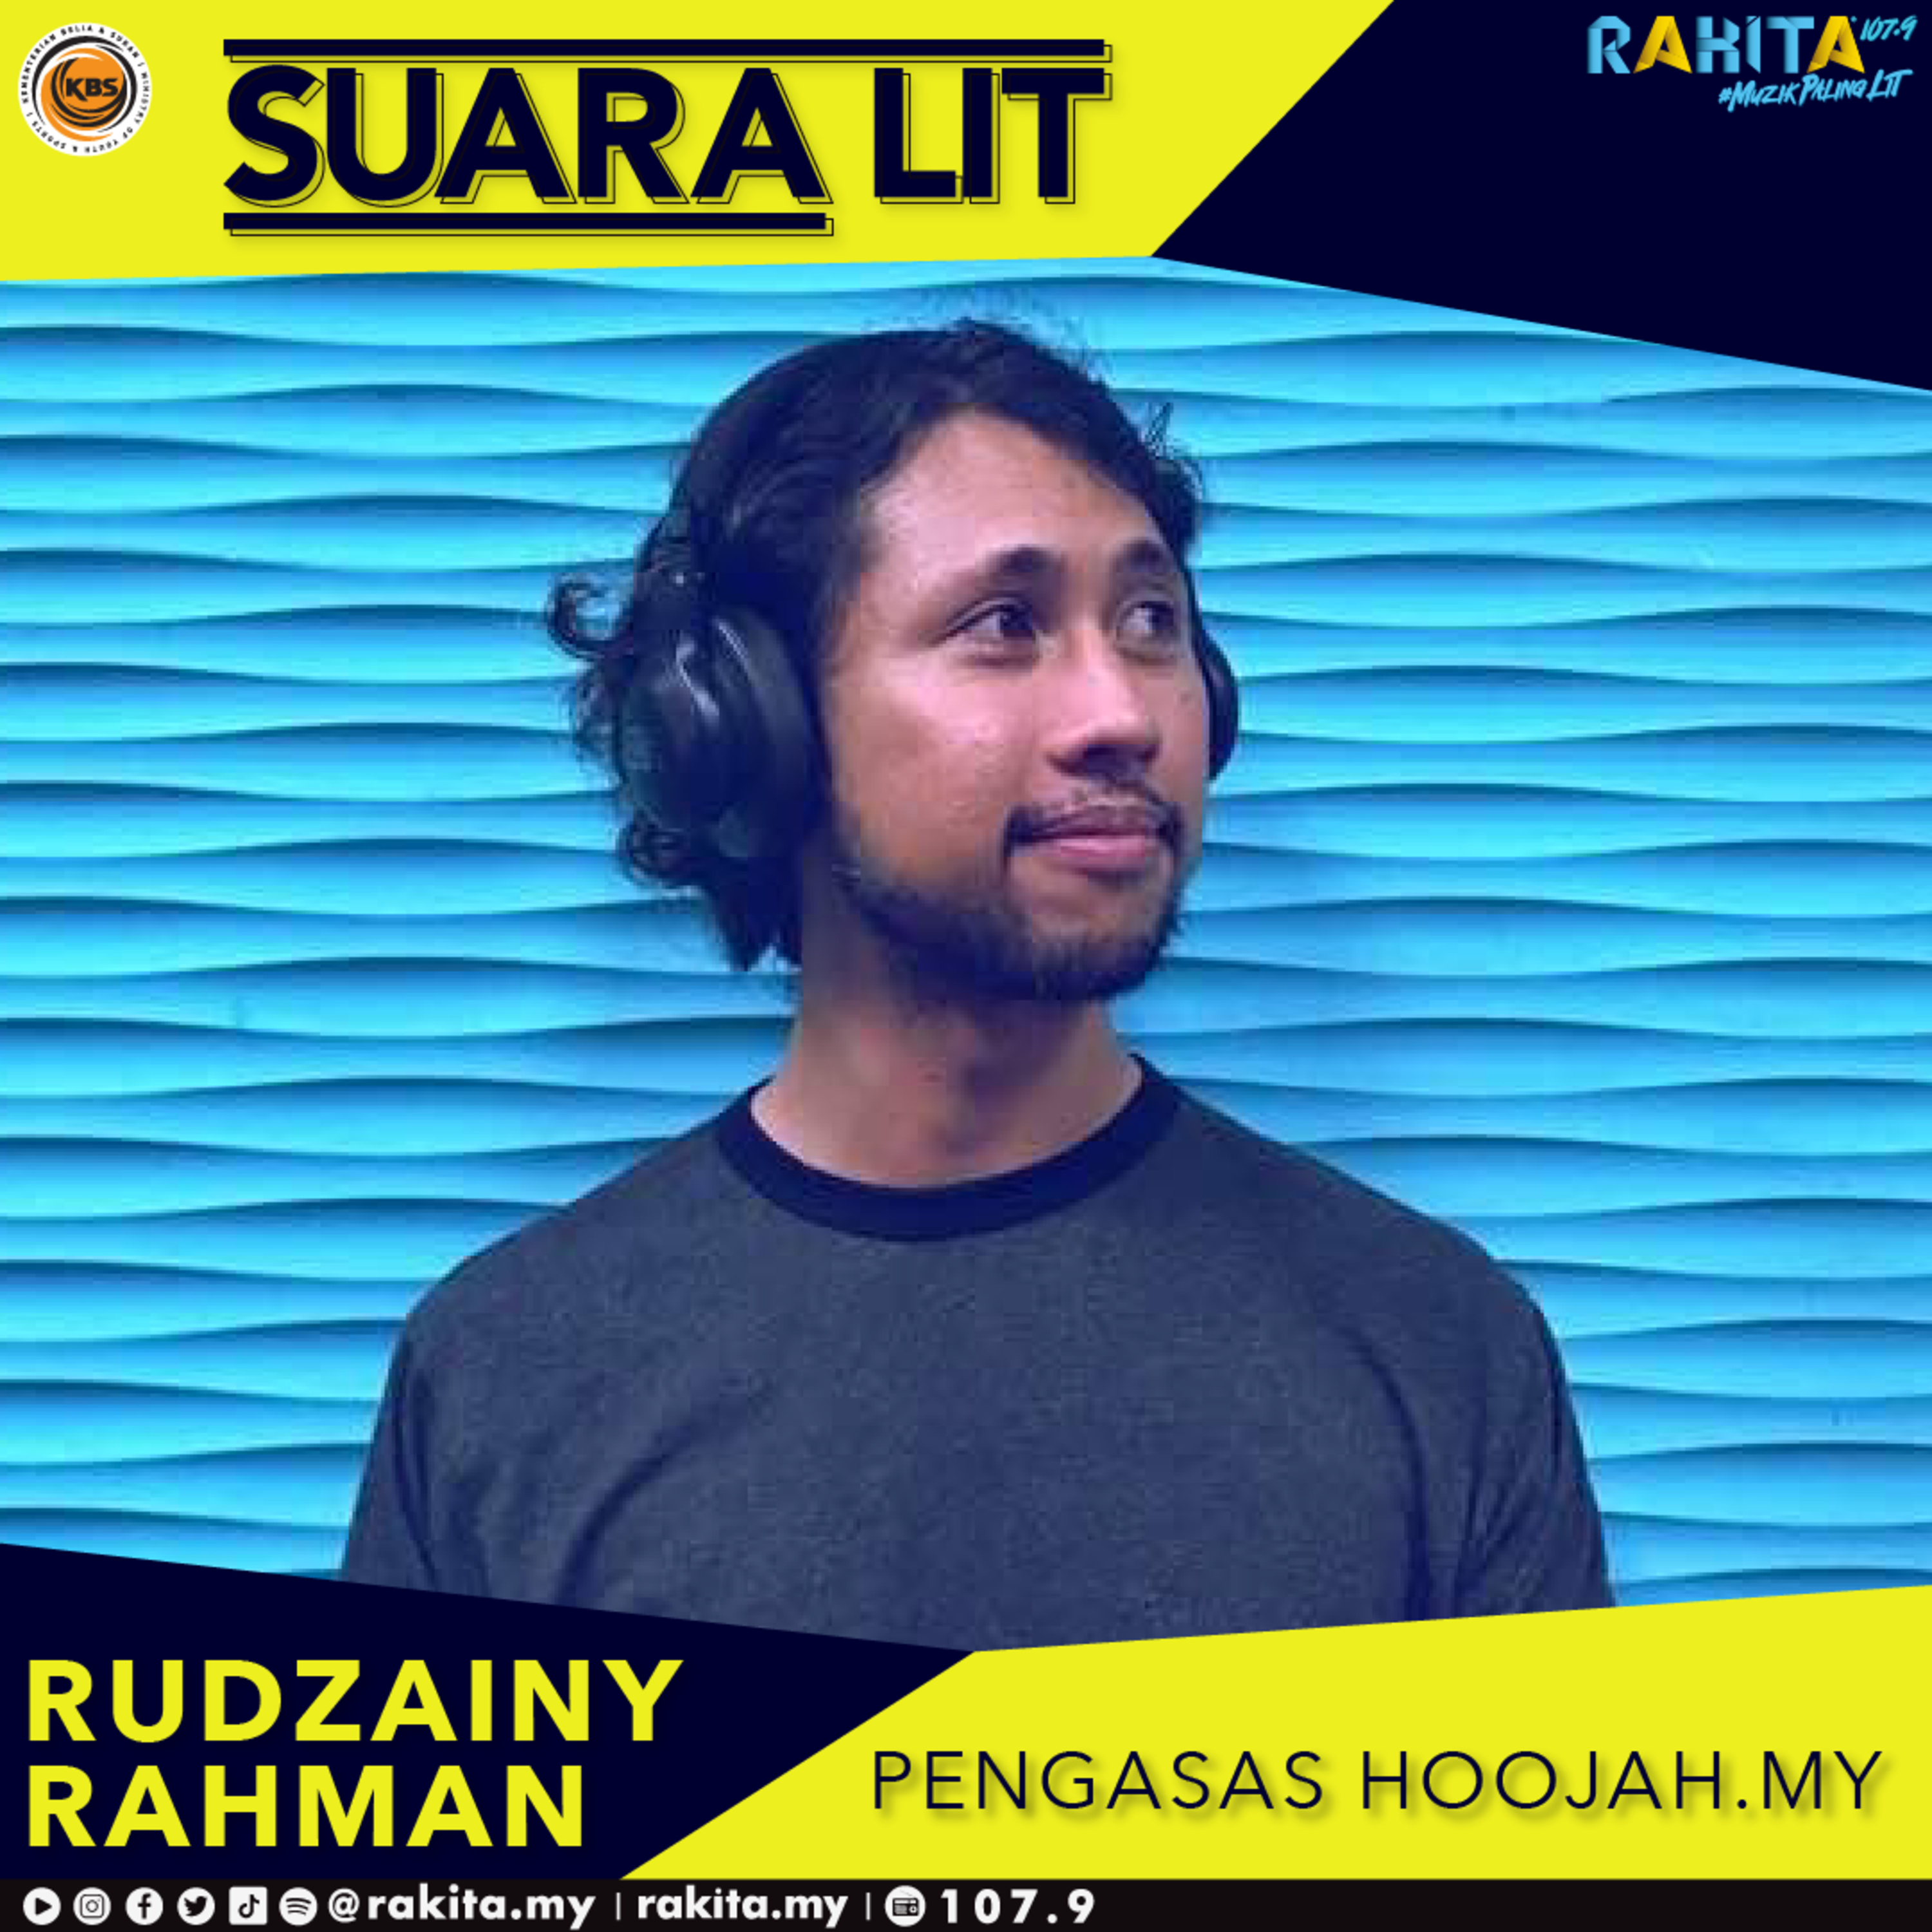 Rudzainy Rahman (Pengasas Website Hoojah.my), S2Ep. 1